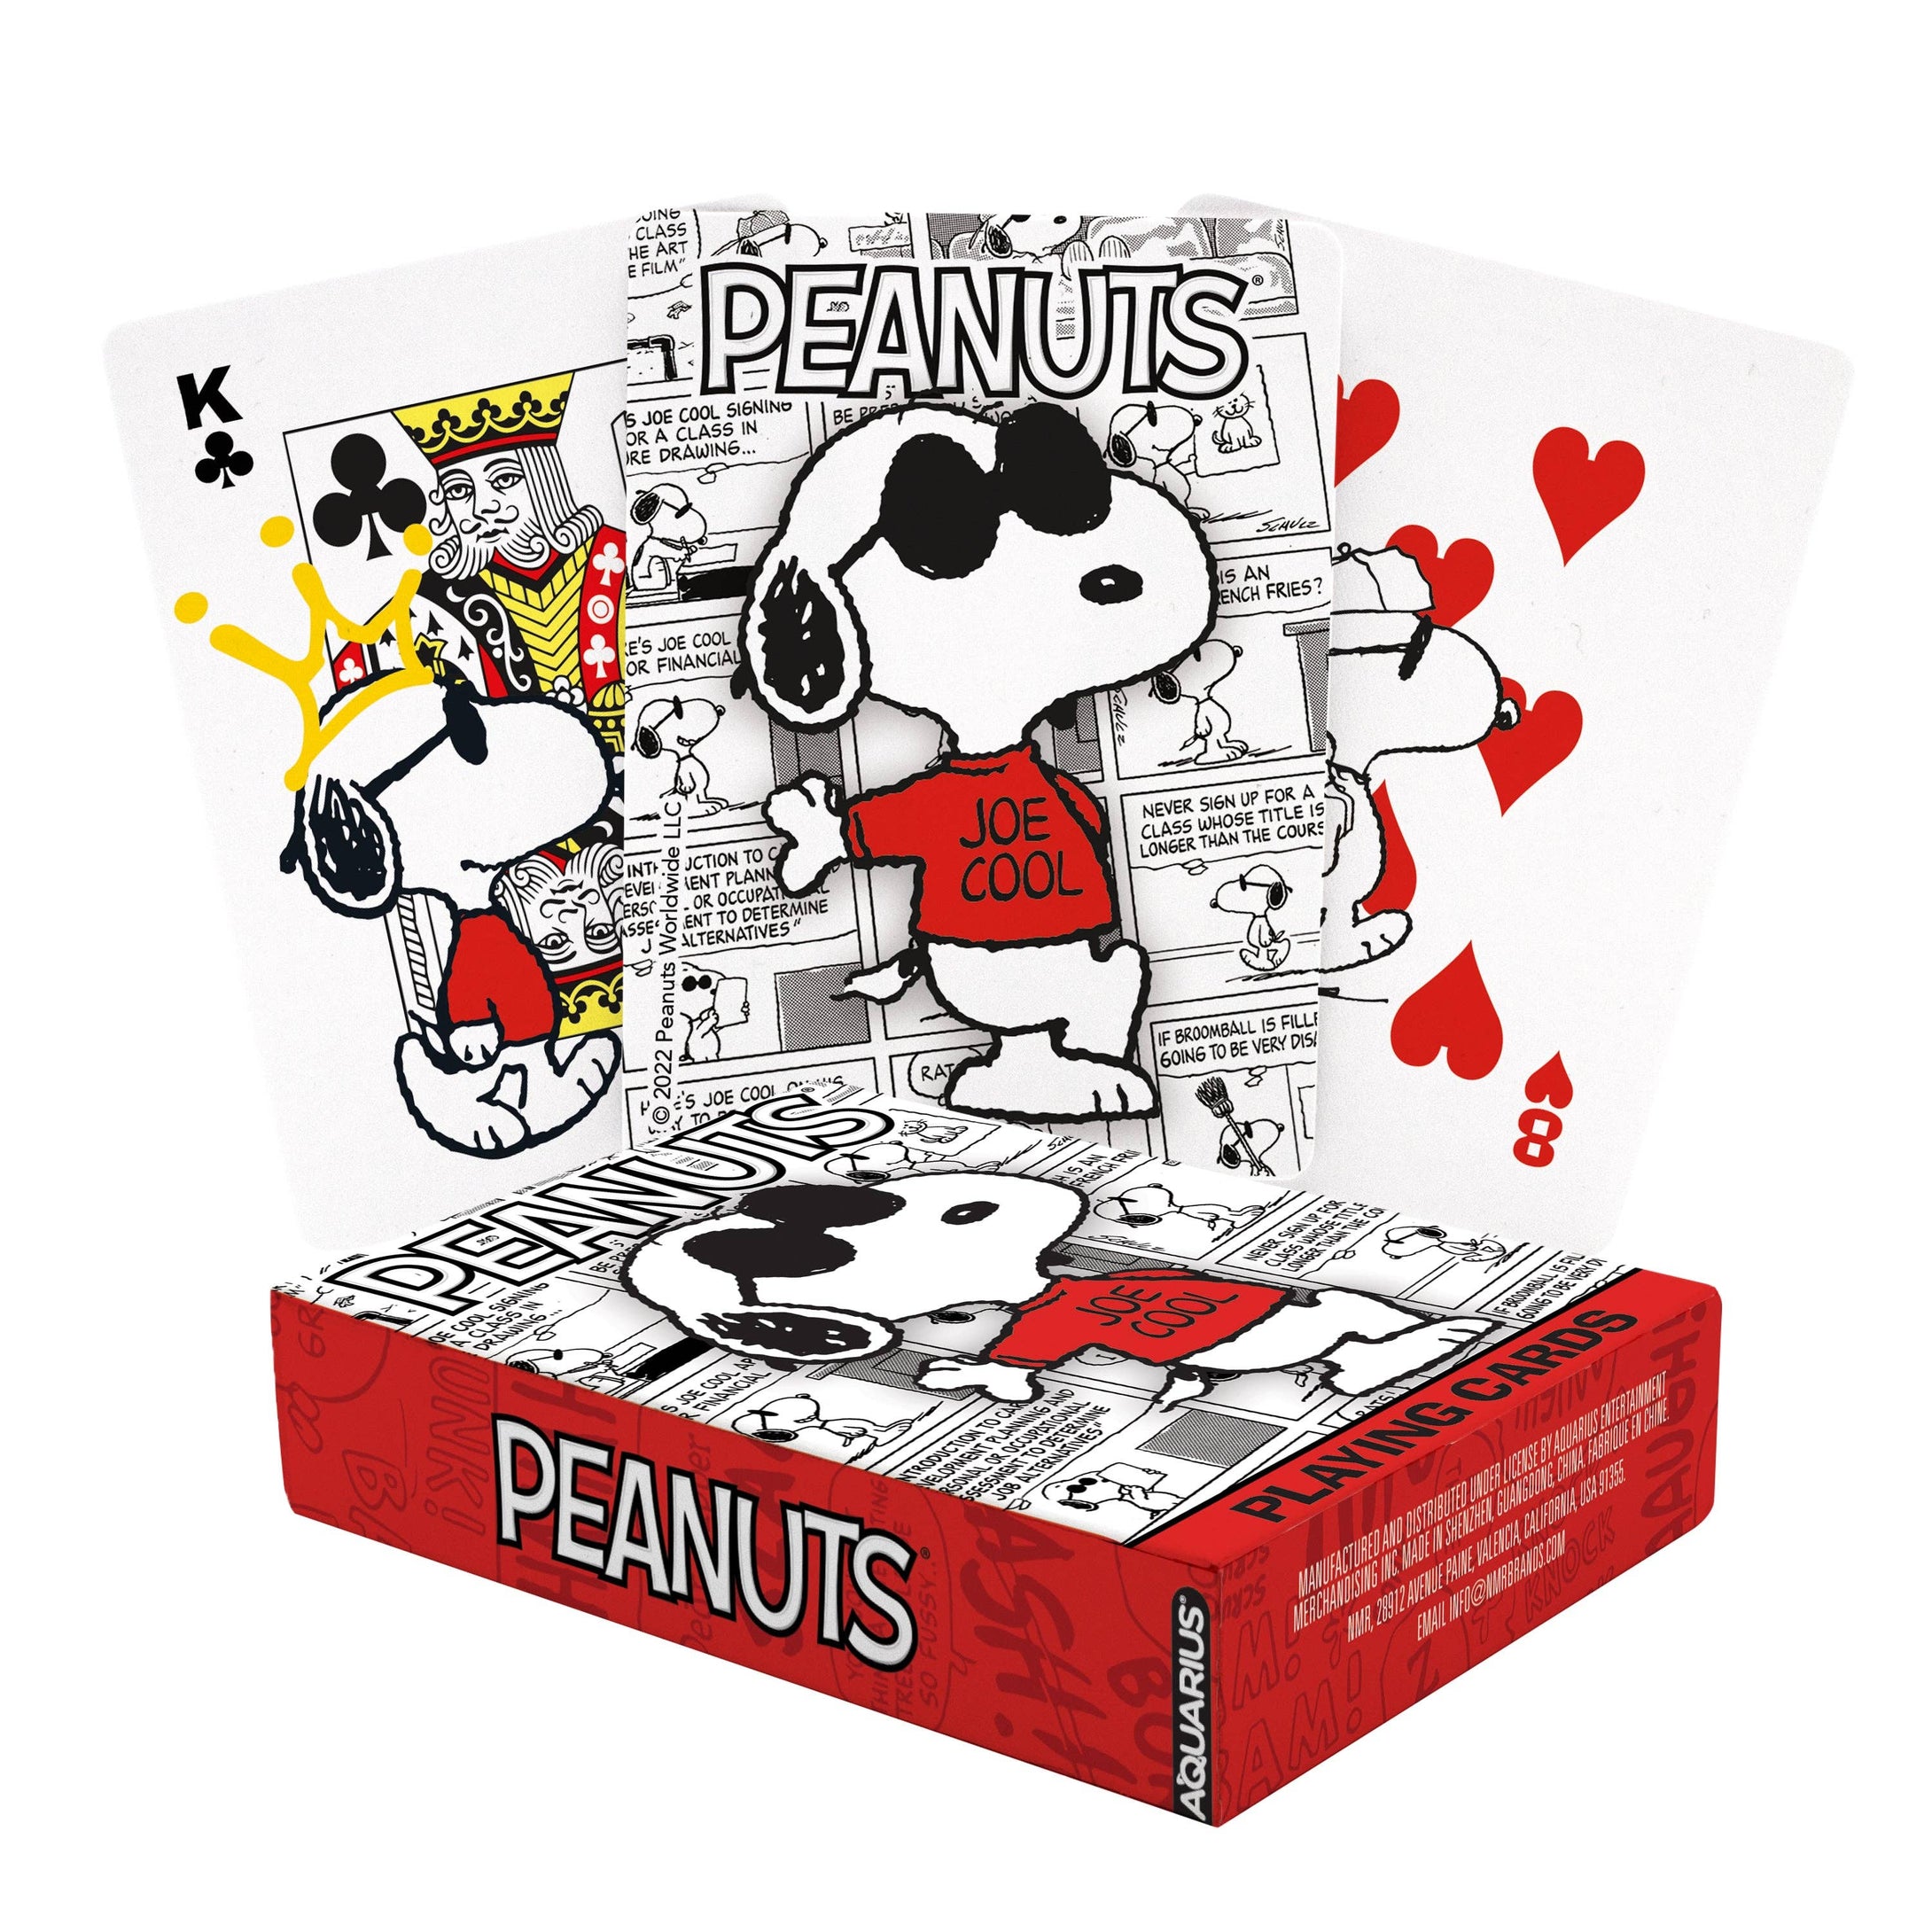 AQUARIUS, GAMAGO, ICUP, & ROCK SAWS by NMR Brands - Peanuts Joe Cool Playing Cards